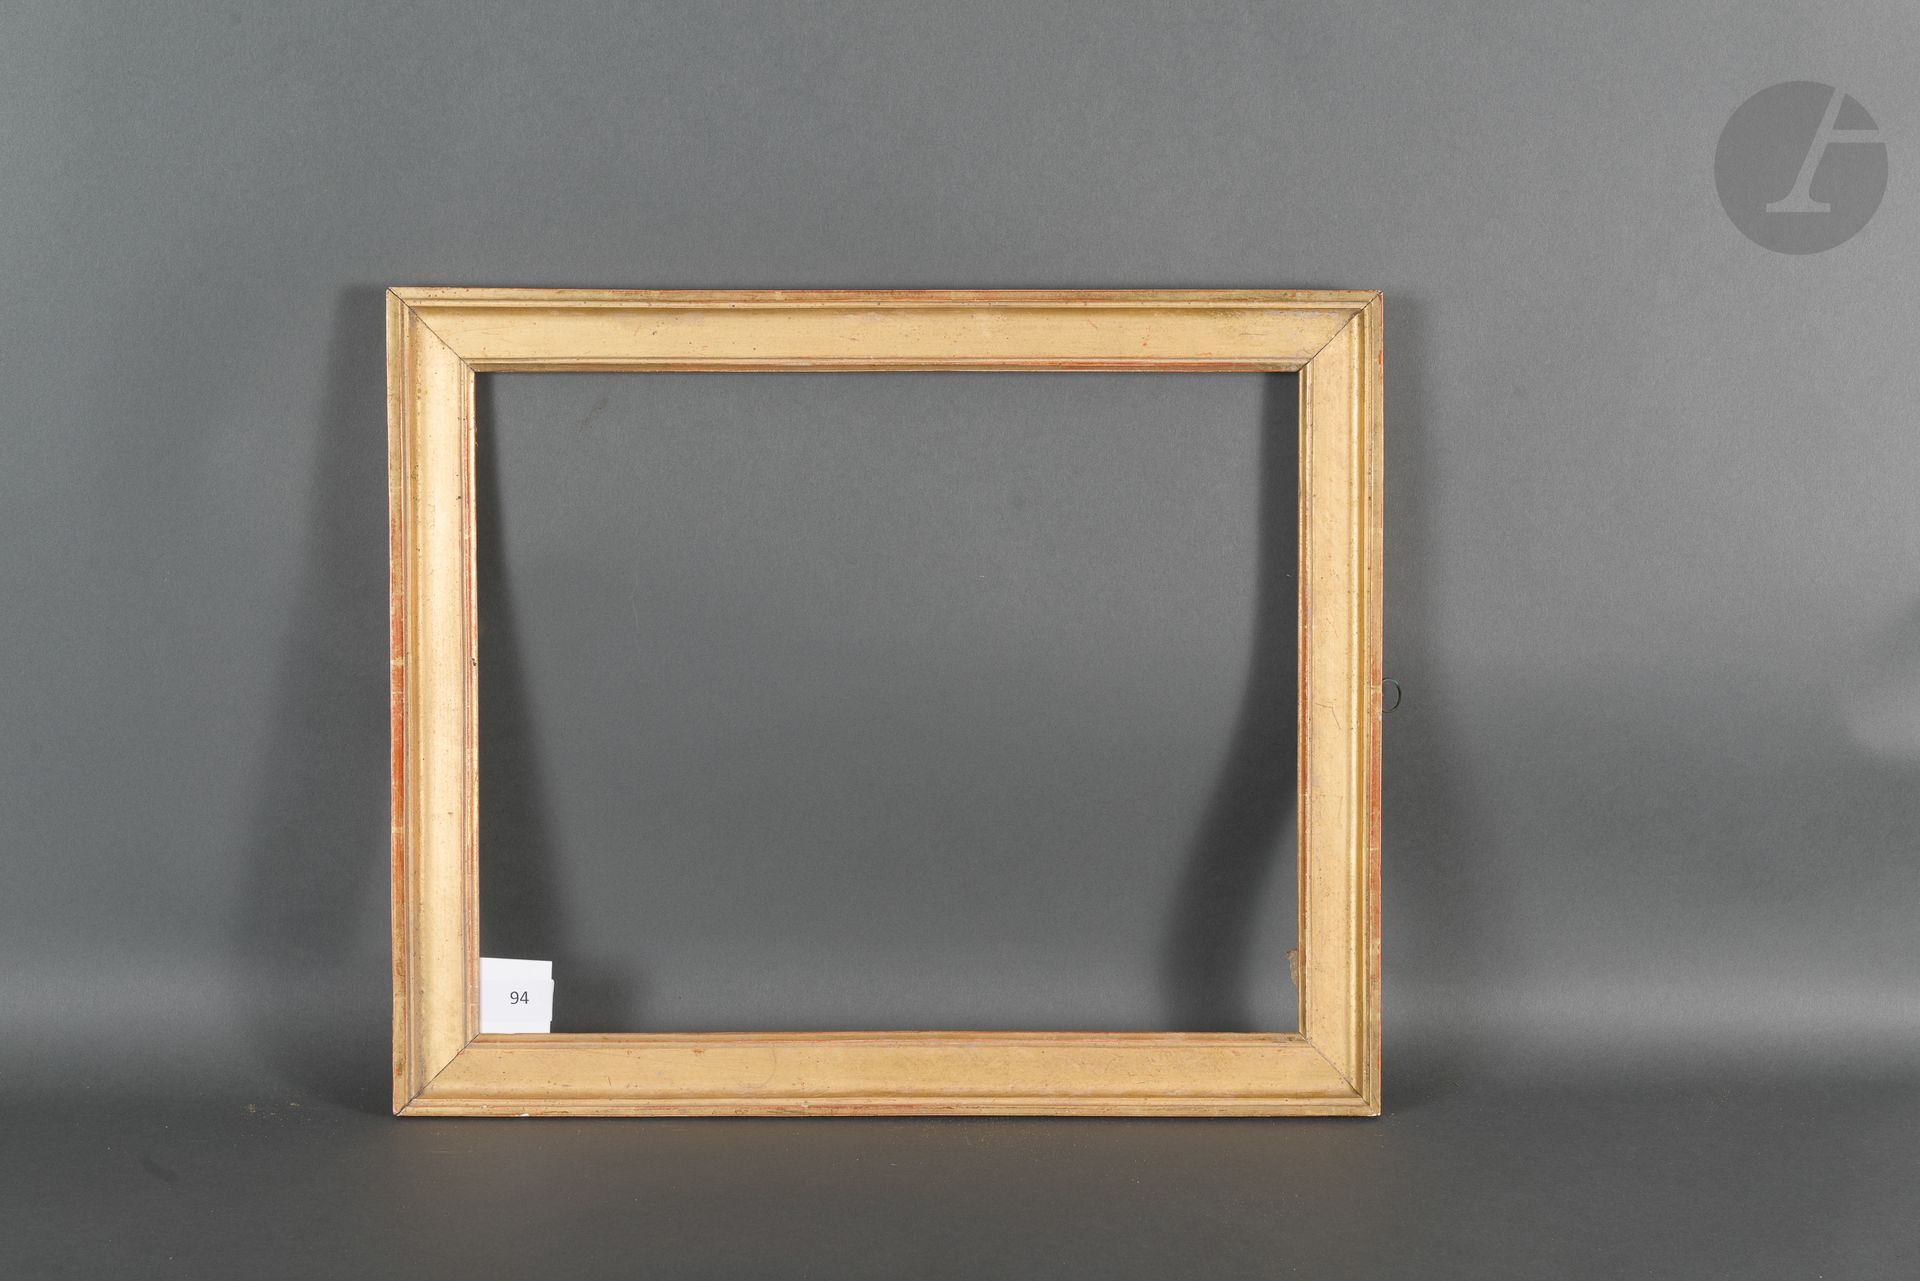 Null 模制和镀金的木杆。
19世纪初。
33,3 x 41,5厘米 - 外形：4厘米